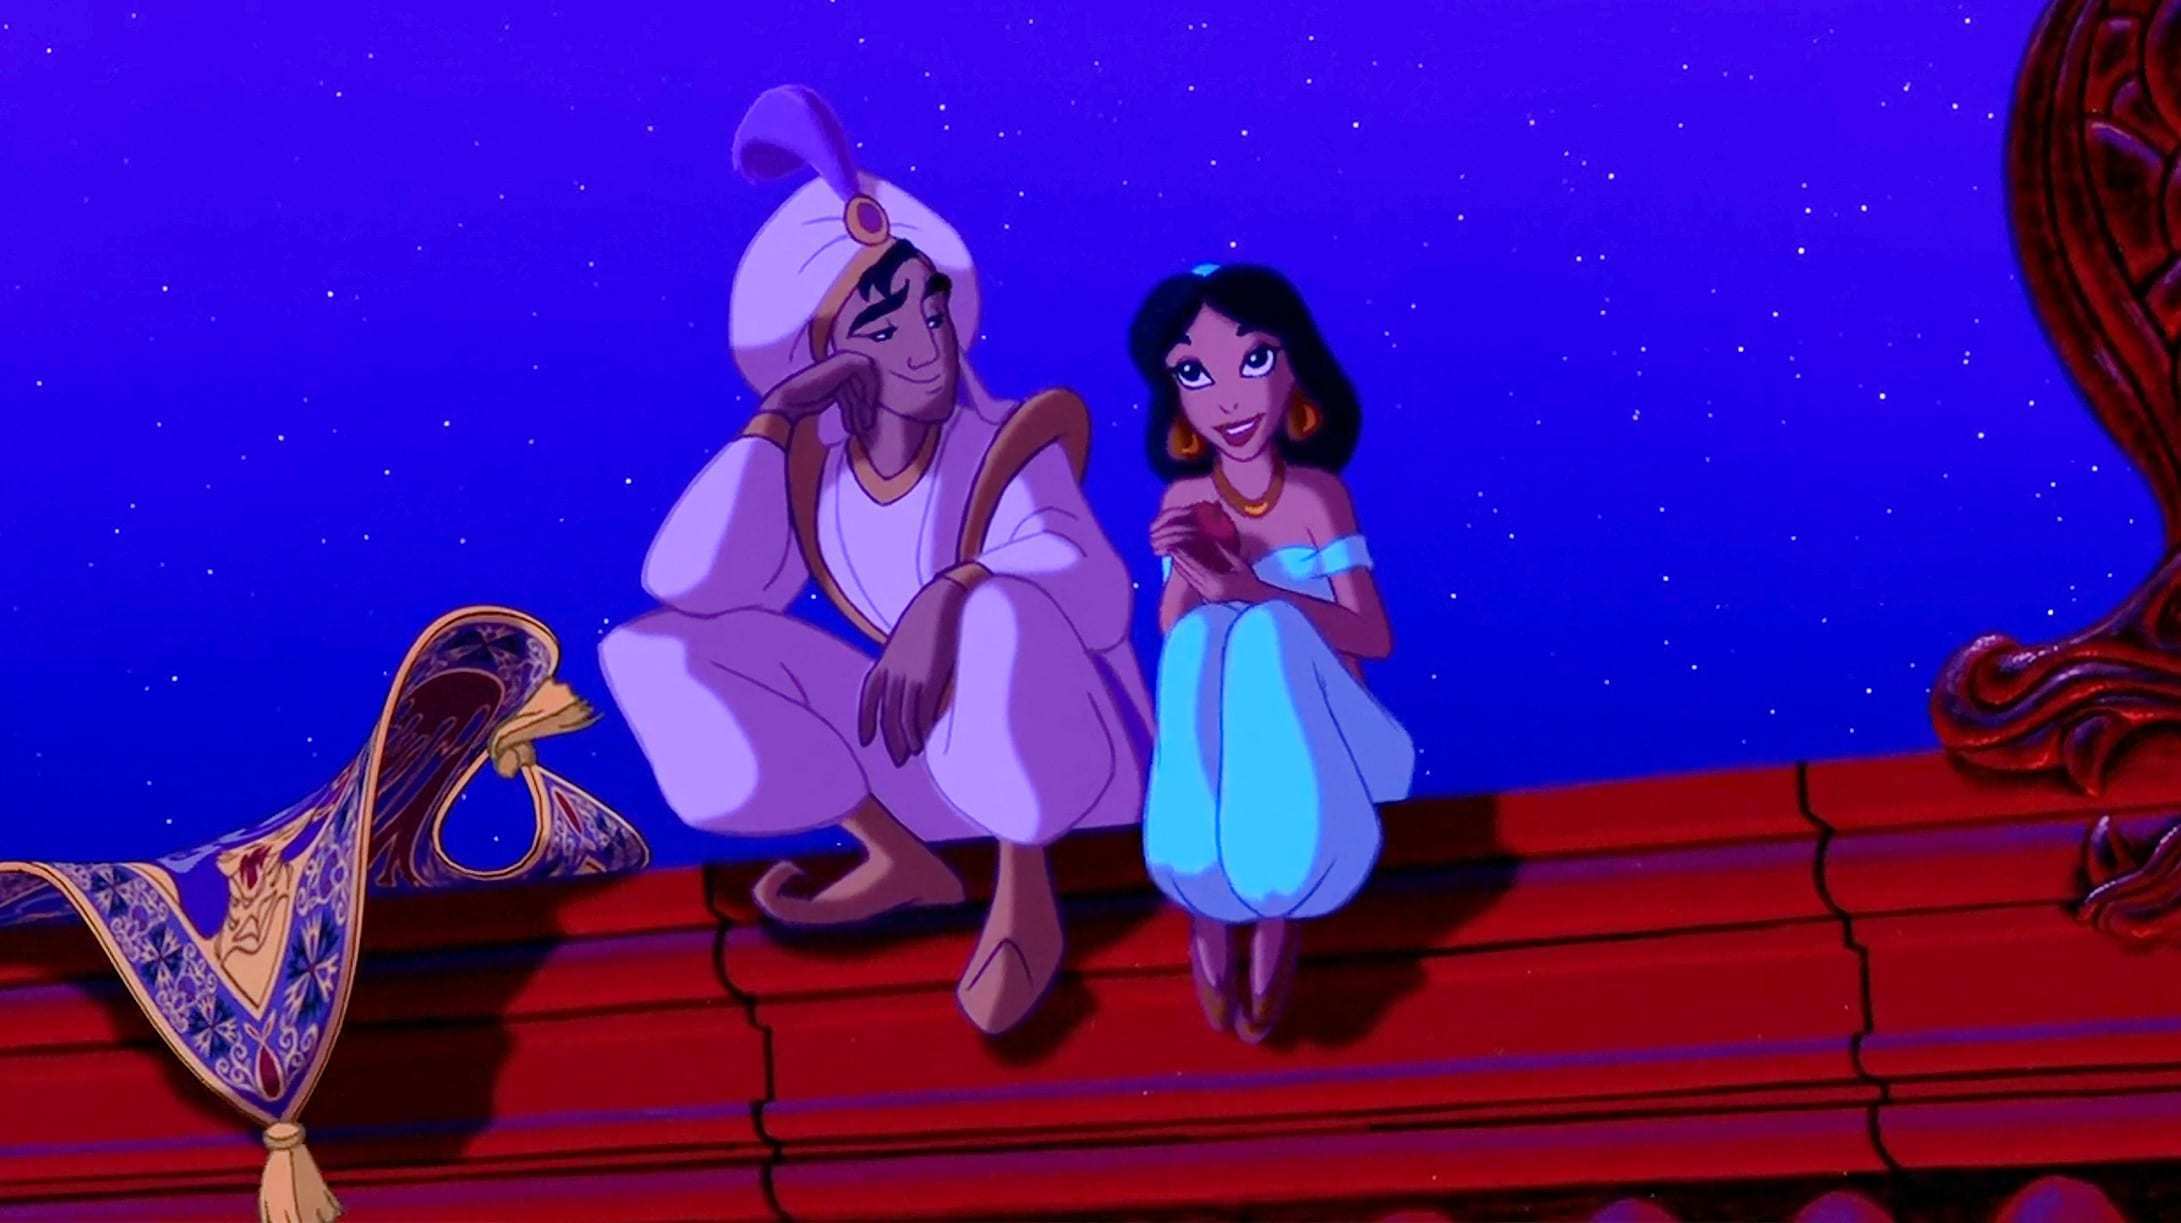 prince characters  Aladdin characters, Aladdin art, Disney characters  costumes